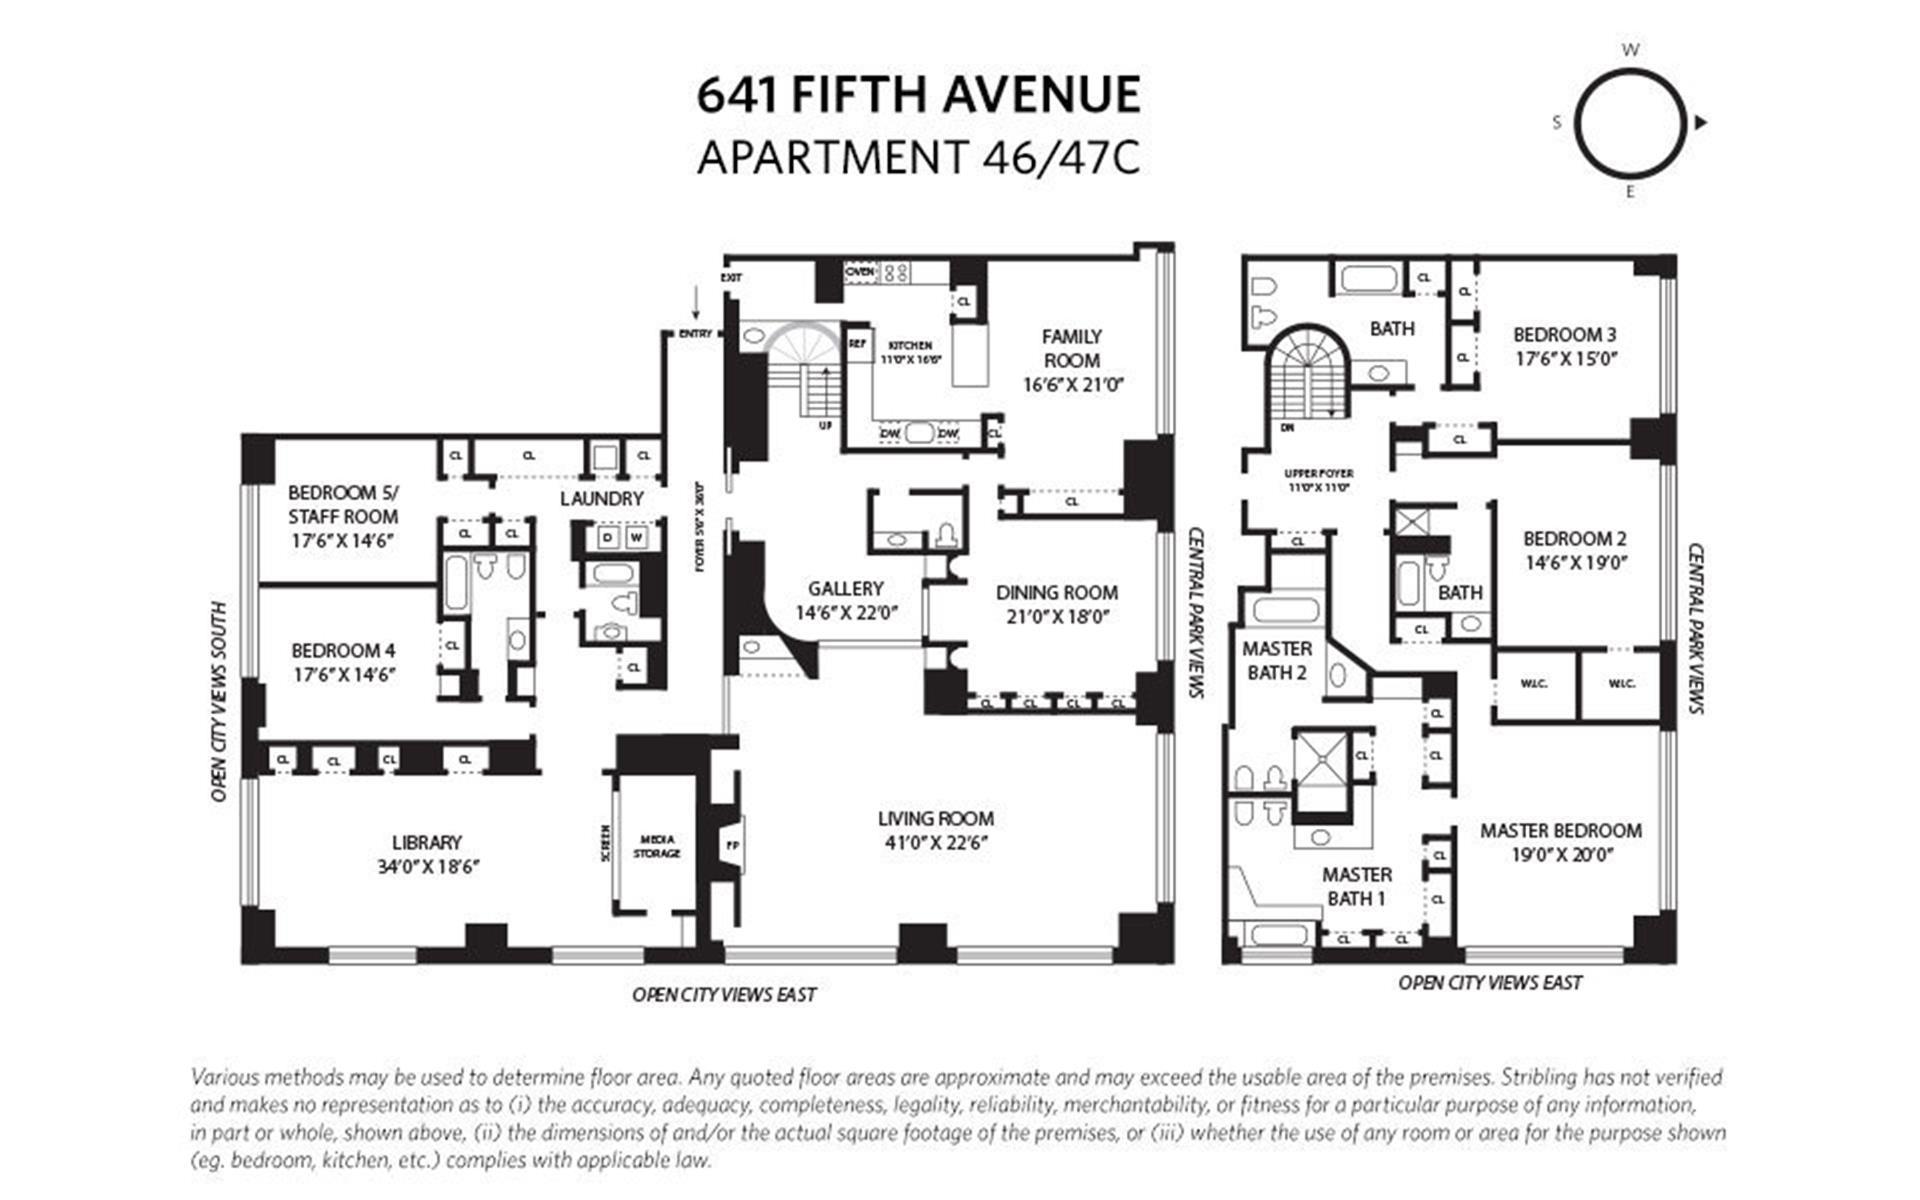 Floorplan for 641 5th Avenue, 46/47C